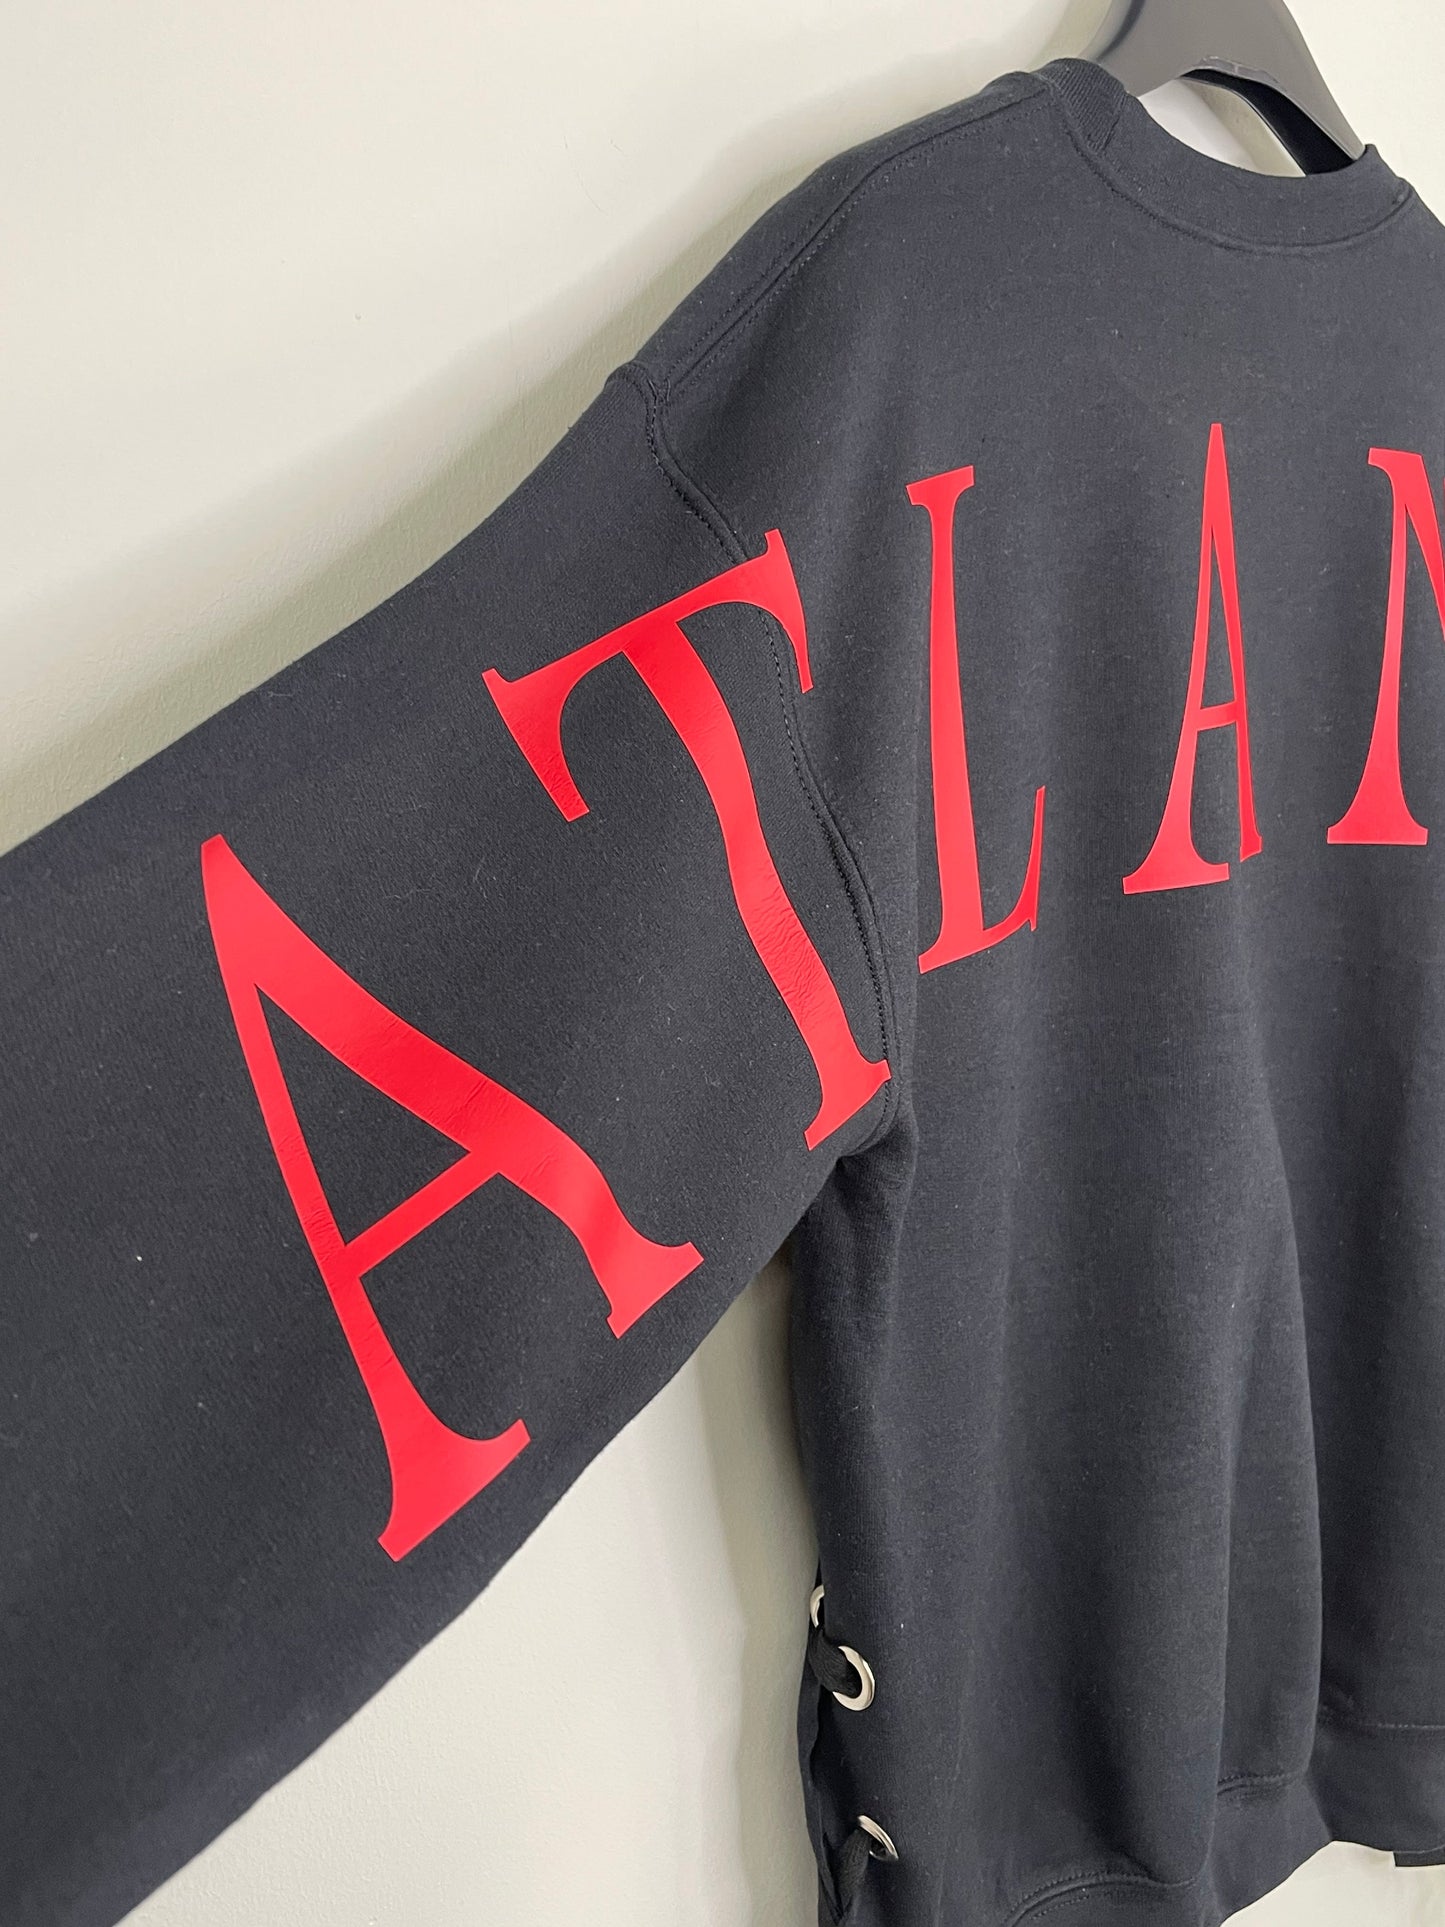 Game Day Sweatshirt, Crewneck Black, Big Red Atlanta w/ Black Ties